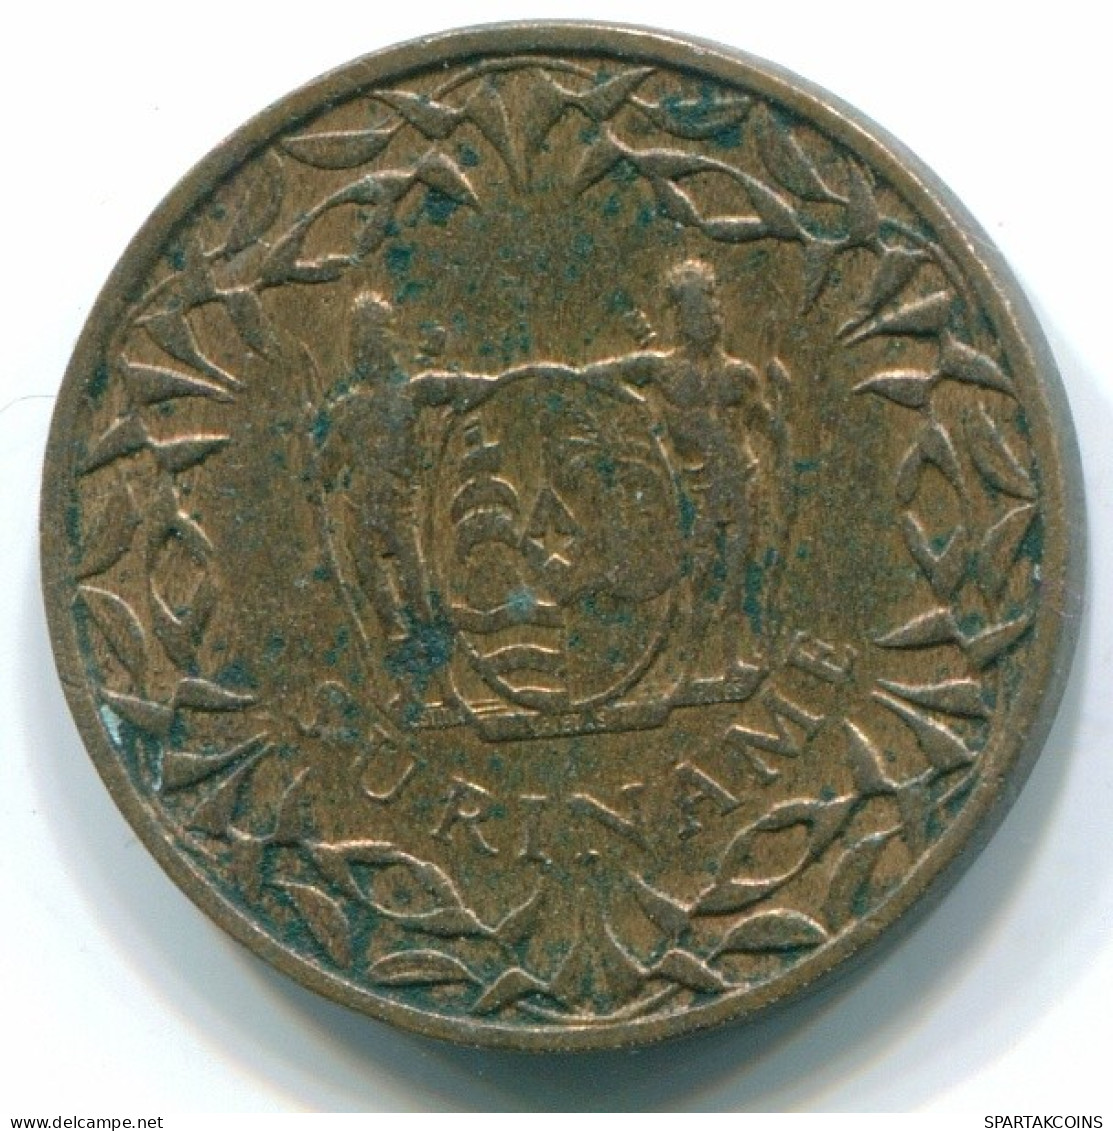 1 CENT 1962 SURINAME Netherlands Bronze Fish Colonial Coin #S10873.U.A - Surinam 1975 - ...